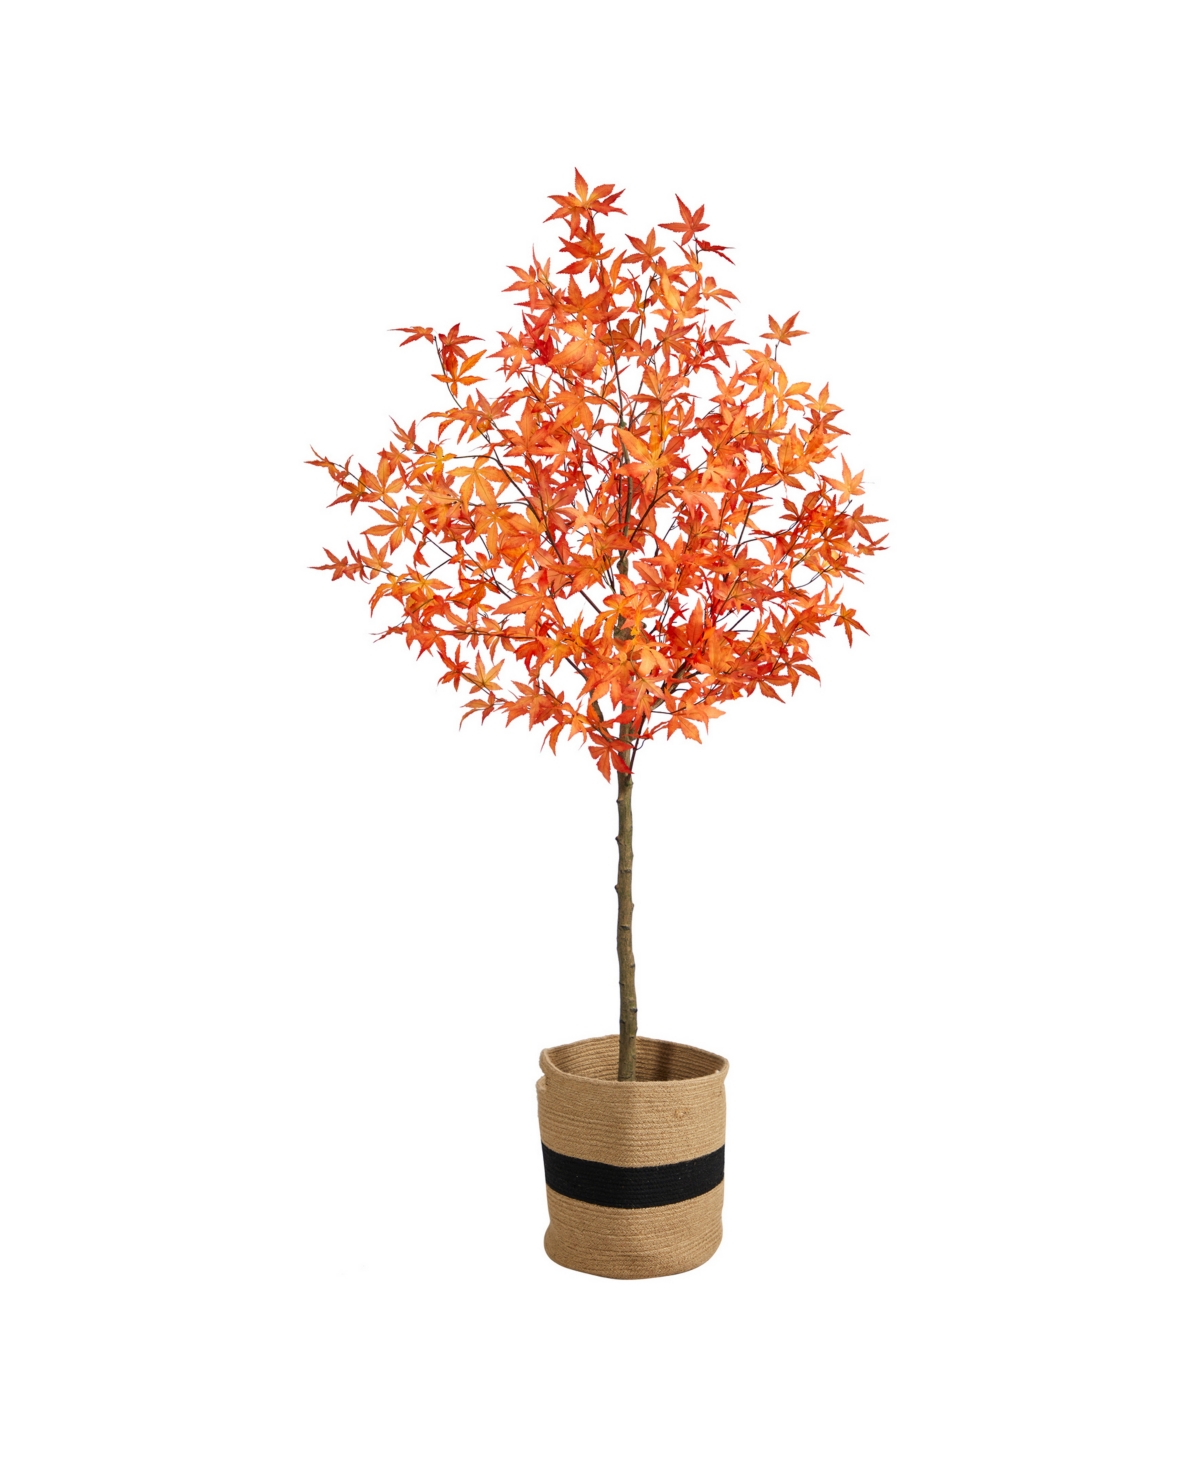 72" Artificial Autumn Maple Tree with Handmade Jute Cotton Basket - Orange